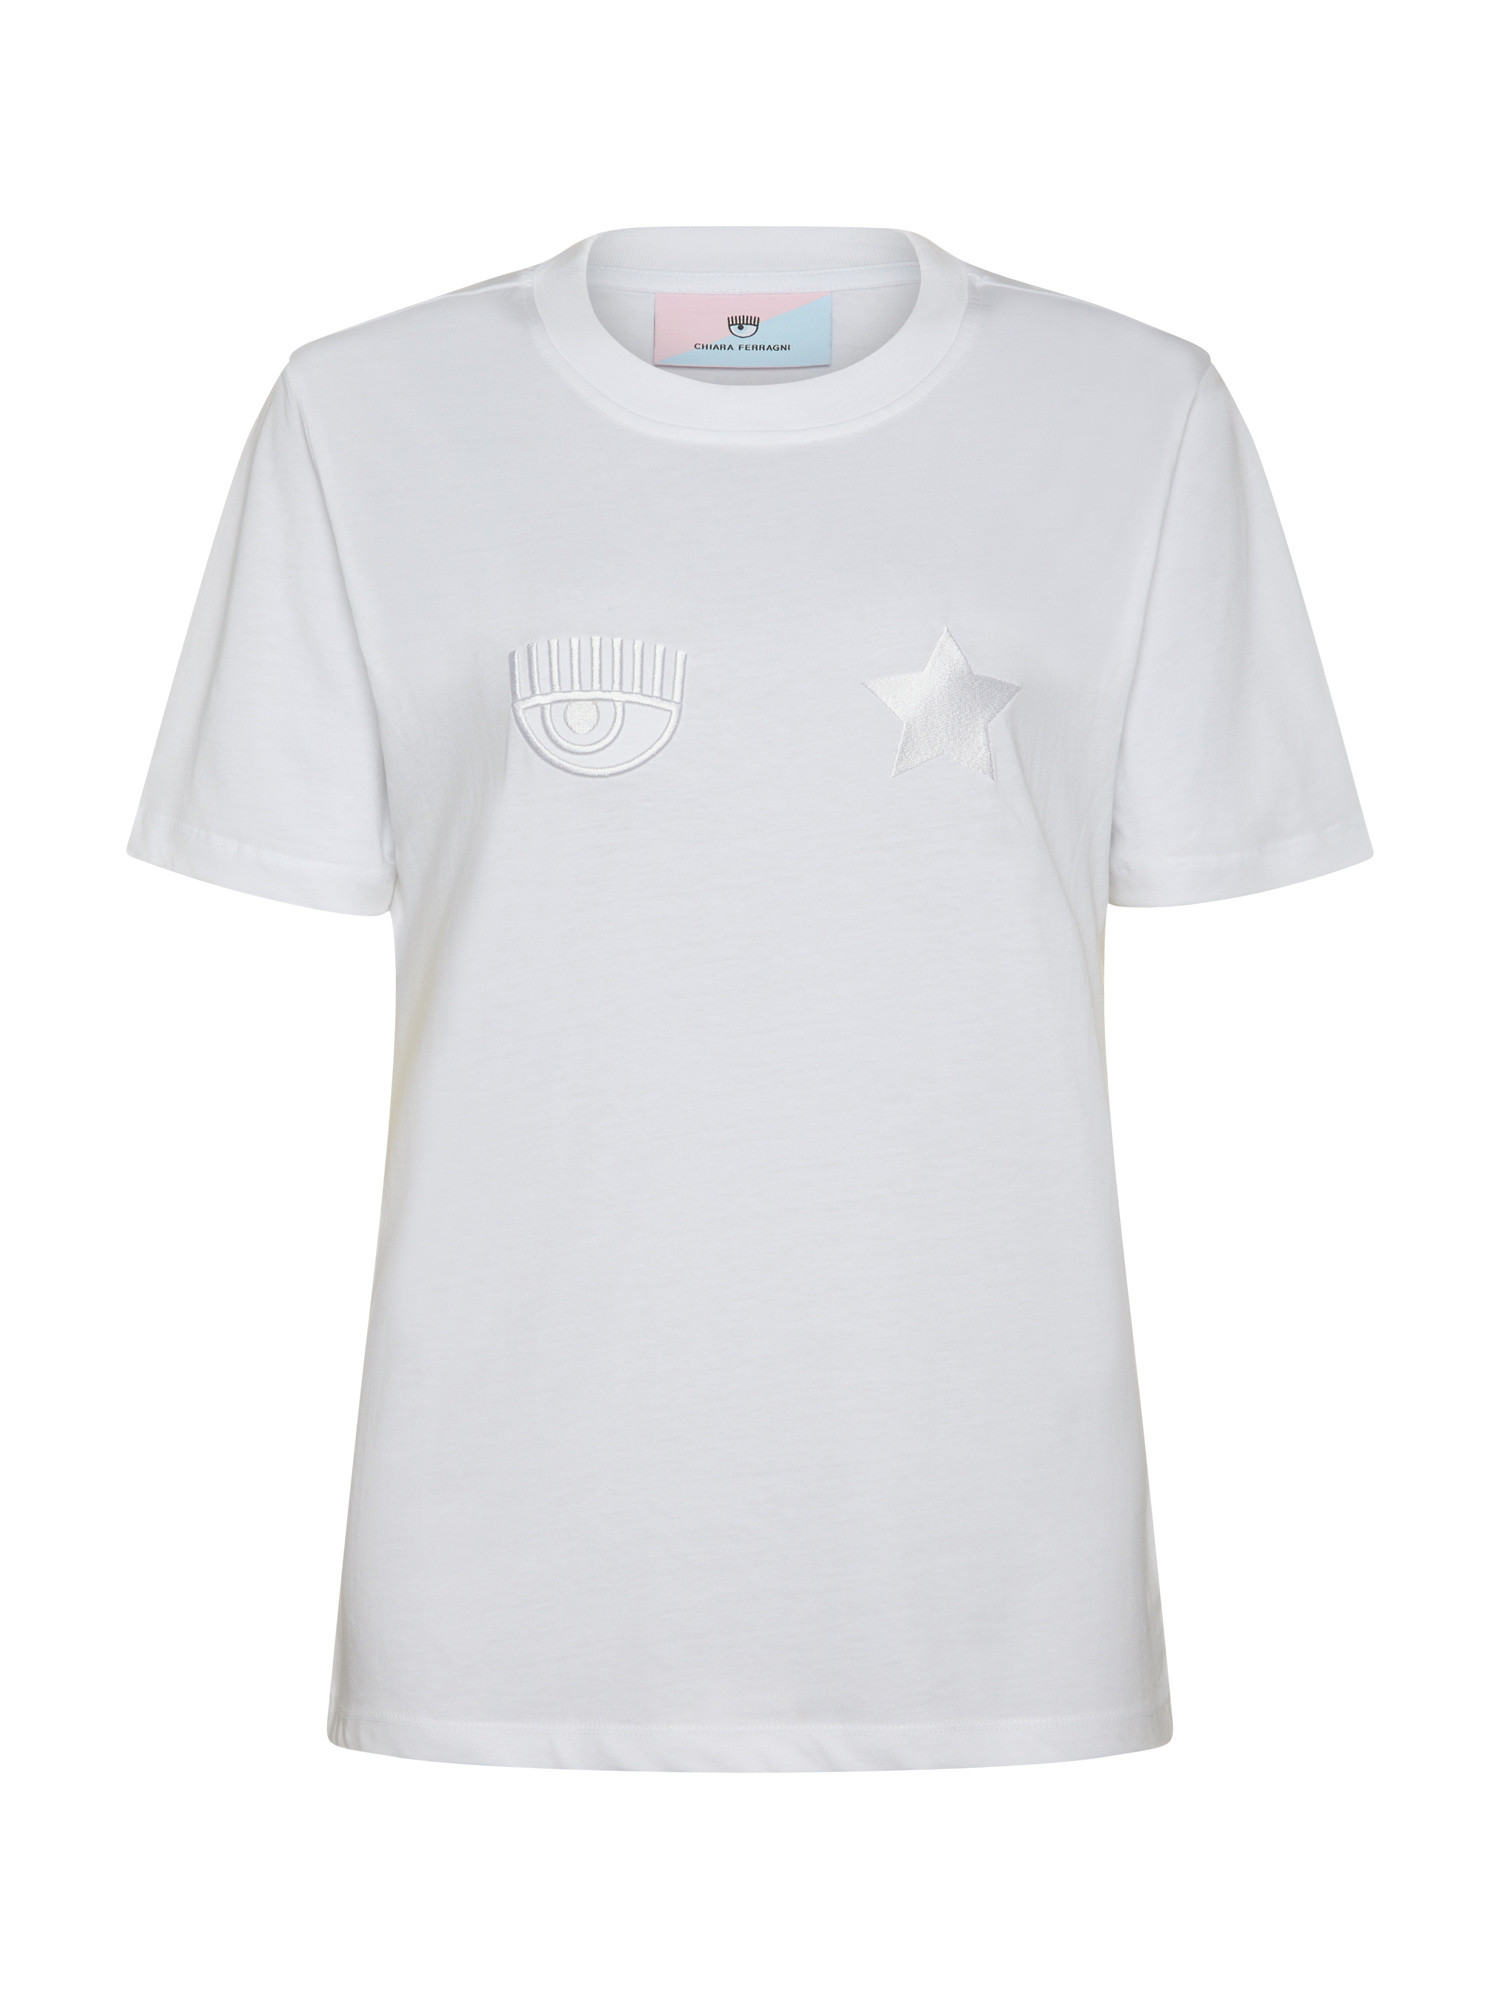 Chiara Ferragni - Embroidered logo T-shirt, White, large image number 0